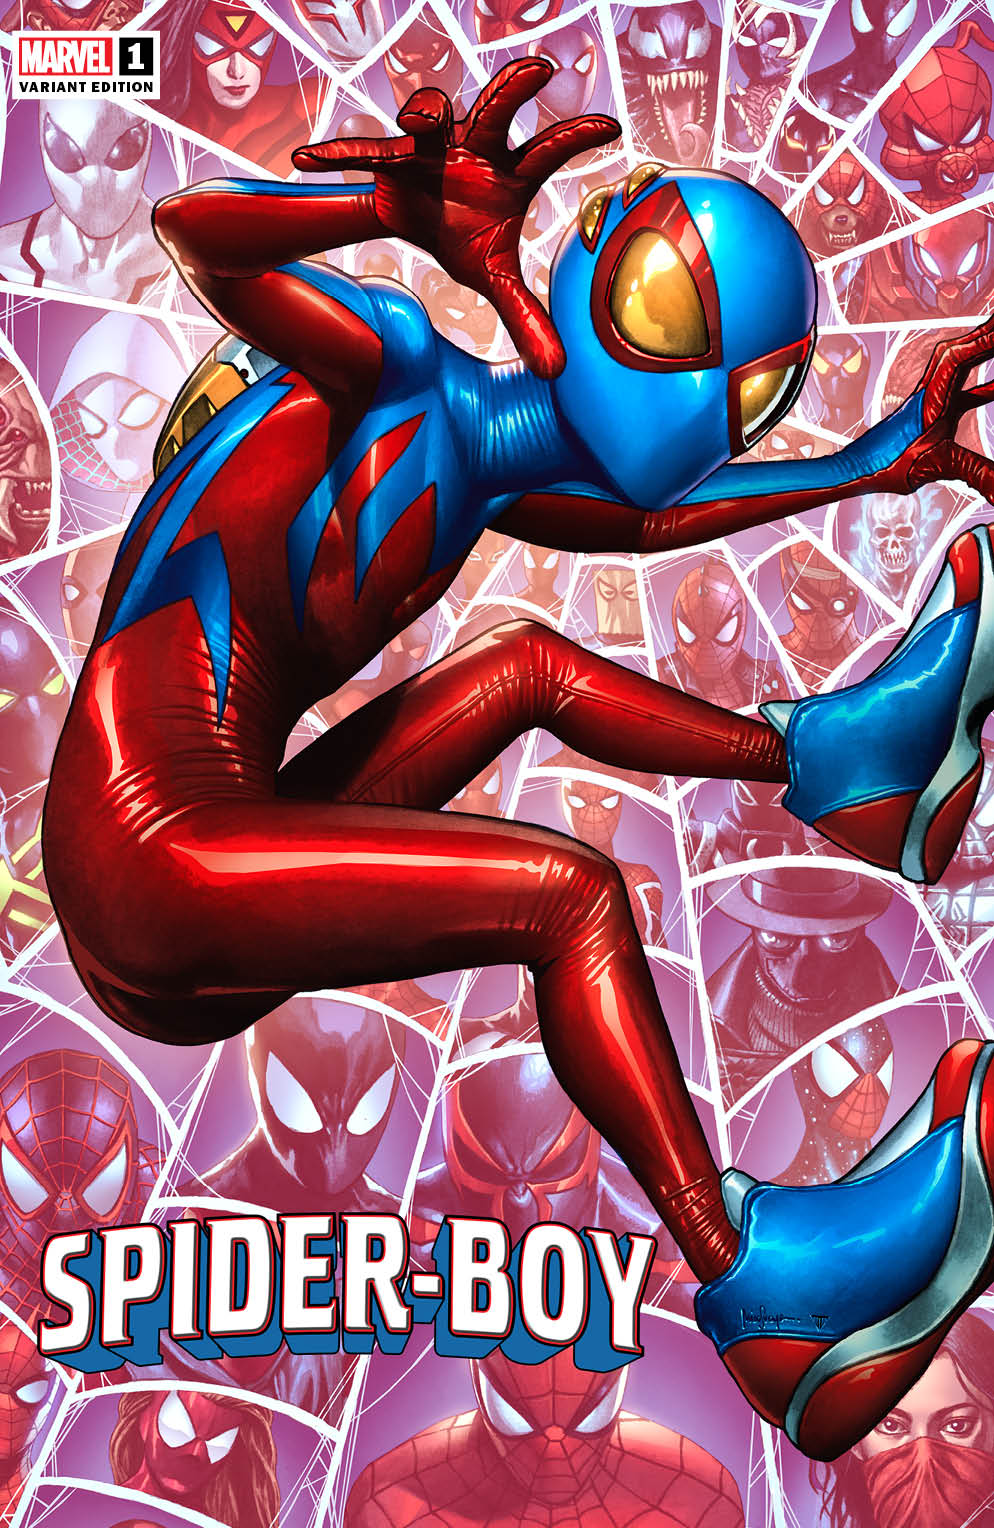 SPIDER-MAN #1 INHYUK LEE 616 Trade Dress Variant Amazing Fantasy #15 H –  The 616 Comics